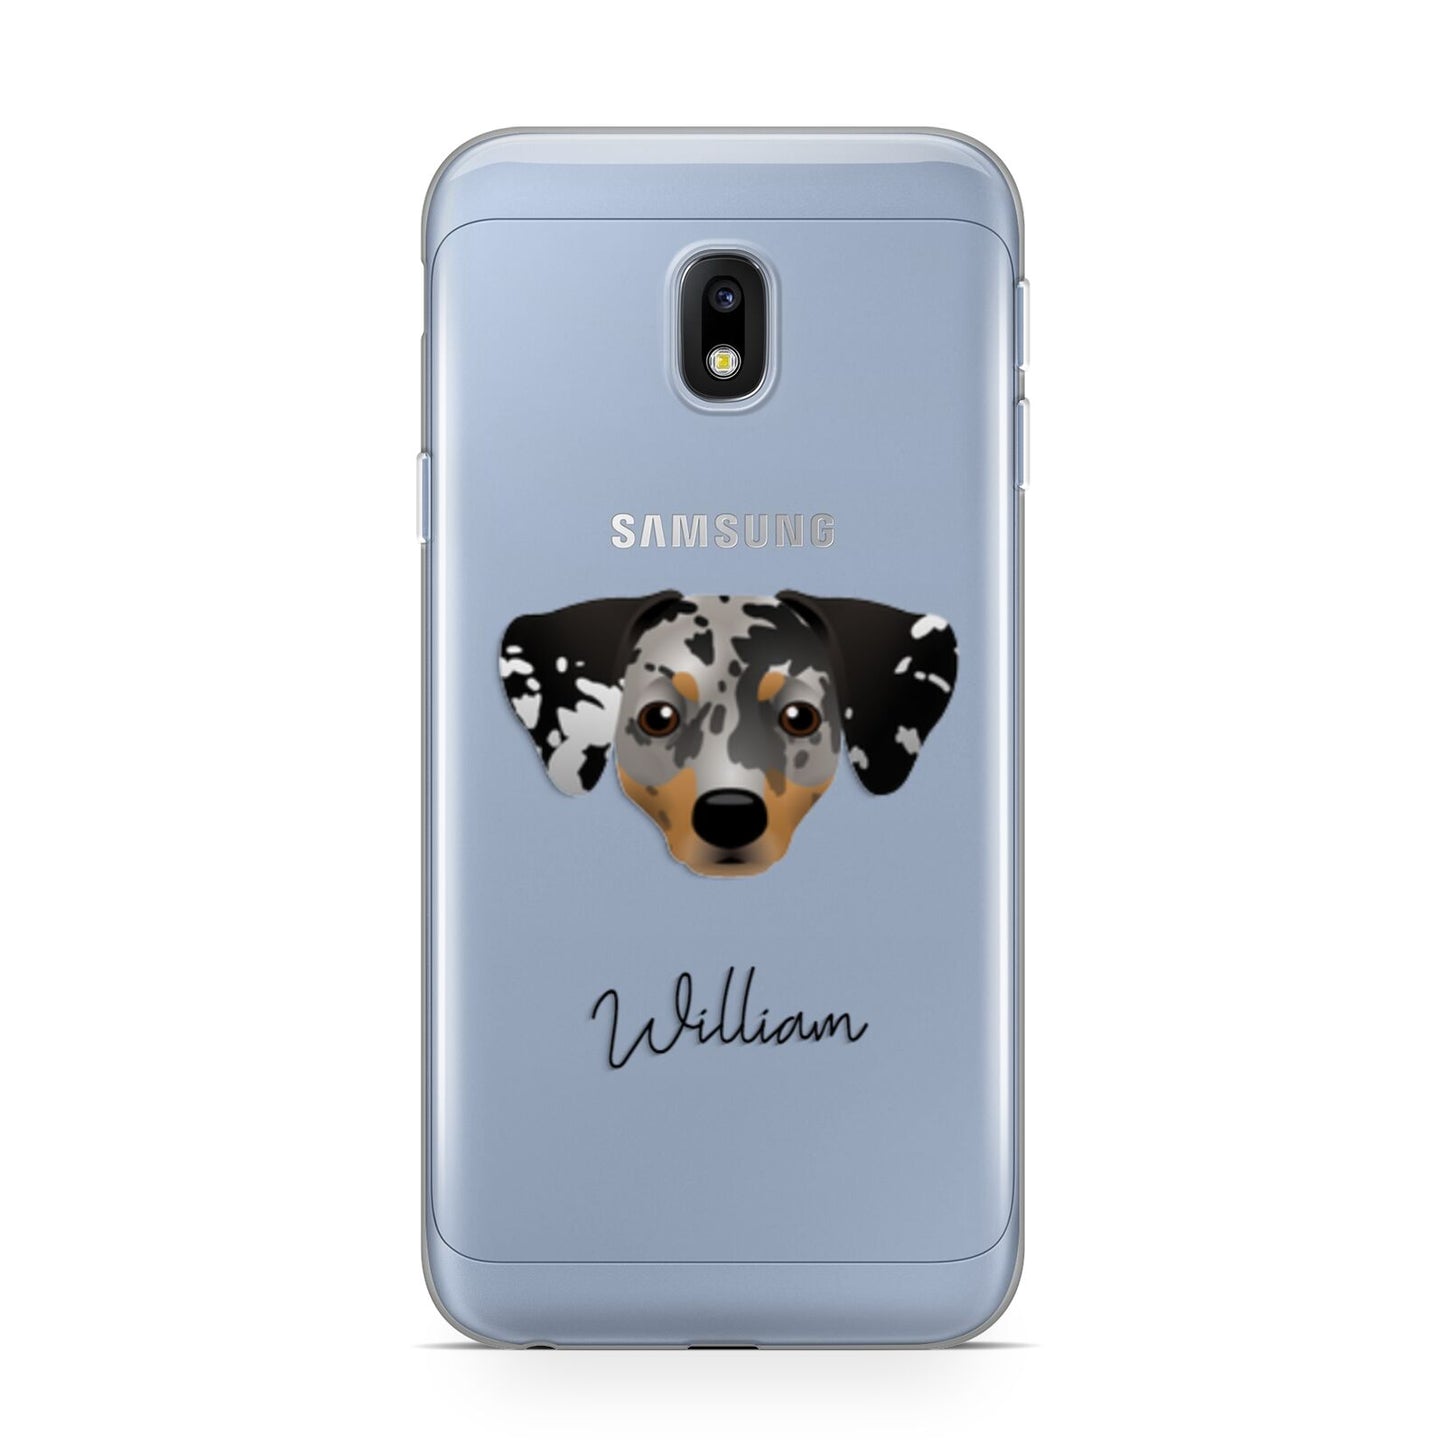 Chiweenie Personalised Samsung Galaxy J3 2017 Case